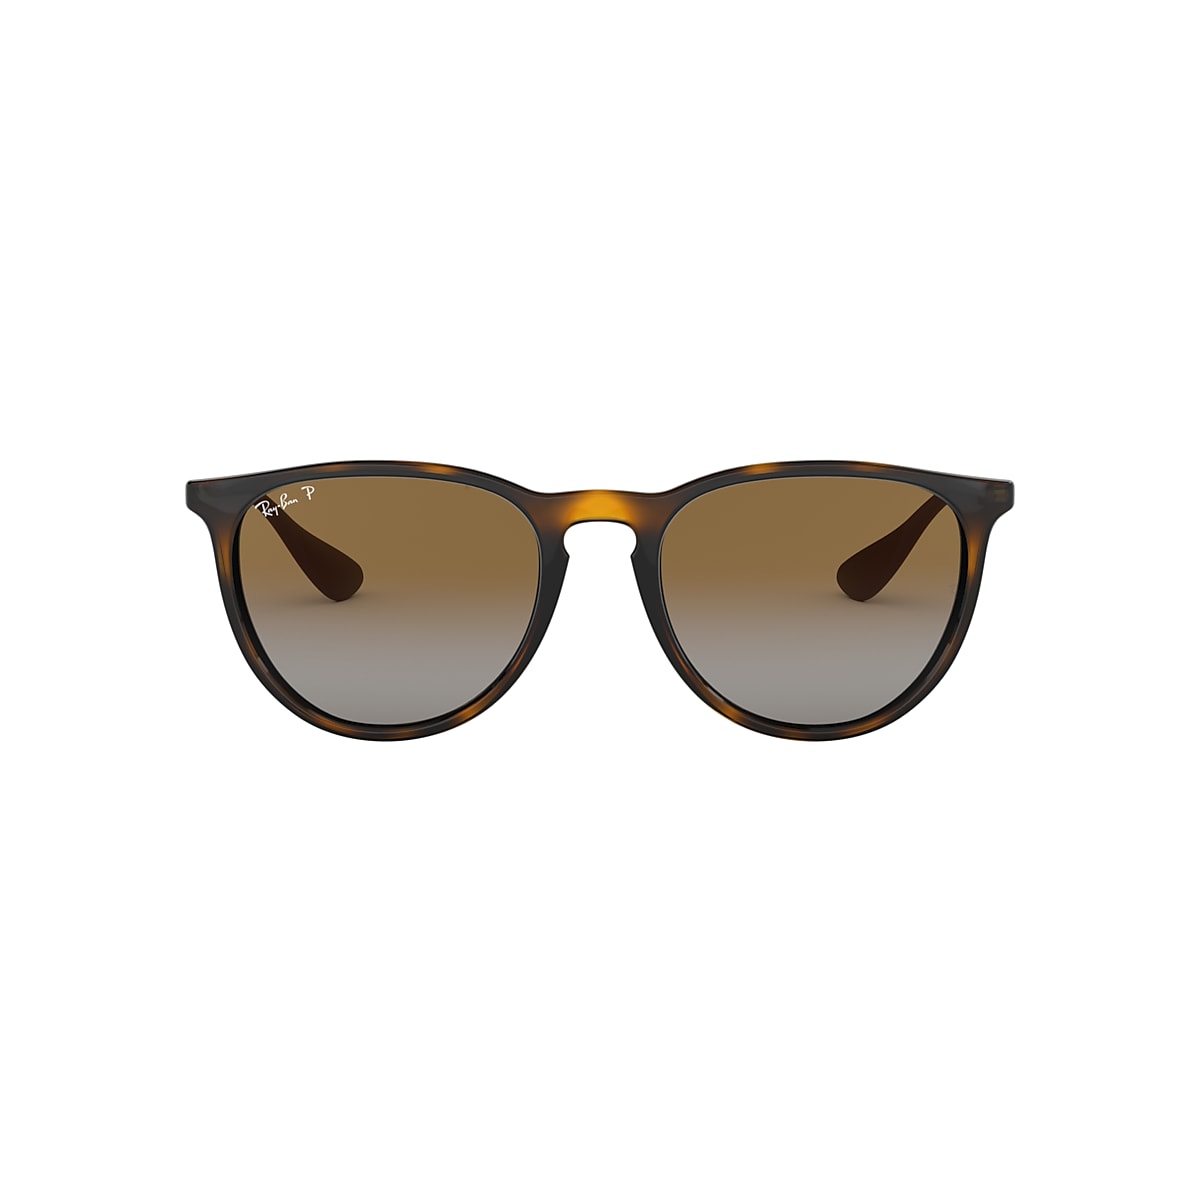 Ray-Ban RB4171 Erika Classic 54 Brown & Light Havana Polarized Sunglasses |  Sunglass Hut Canada